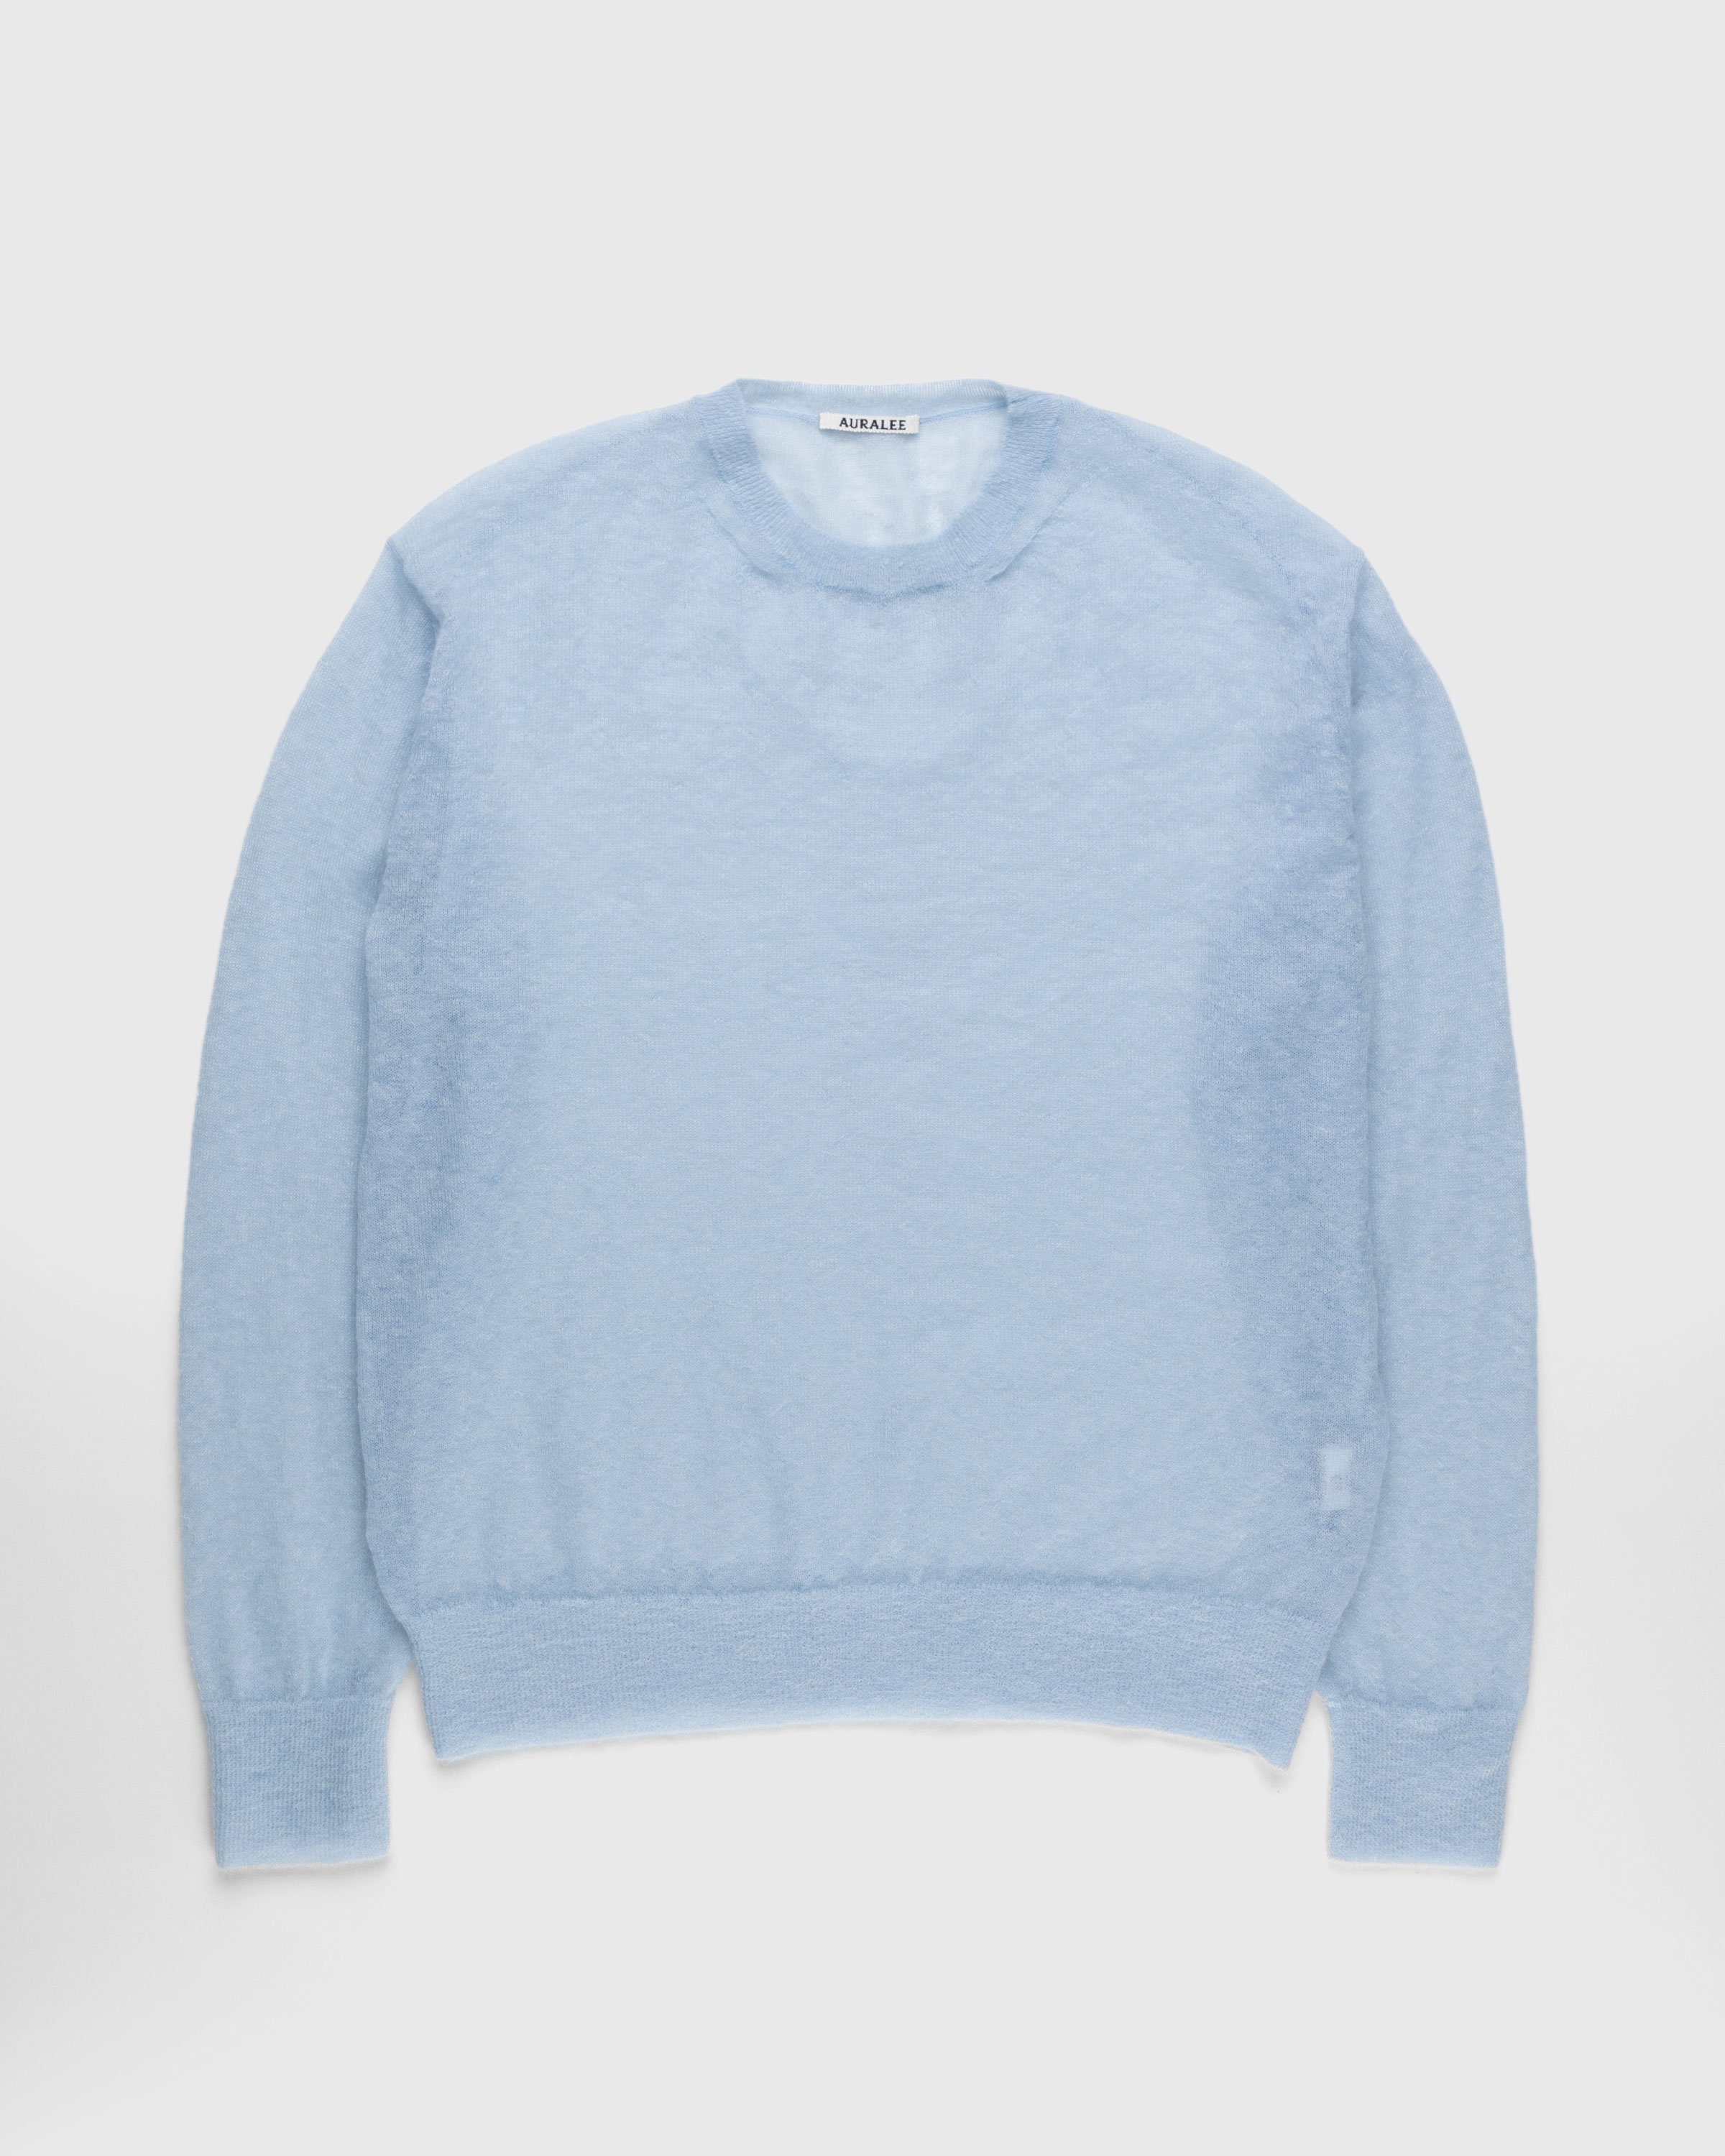 Auralee - Kid Mohair Sheer Knit Light Blue - Clothing - Blue - Image 1